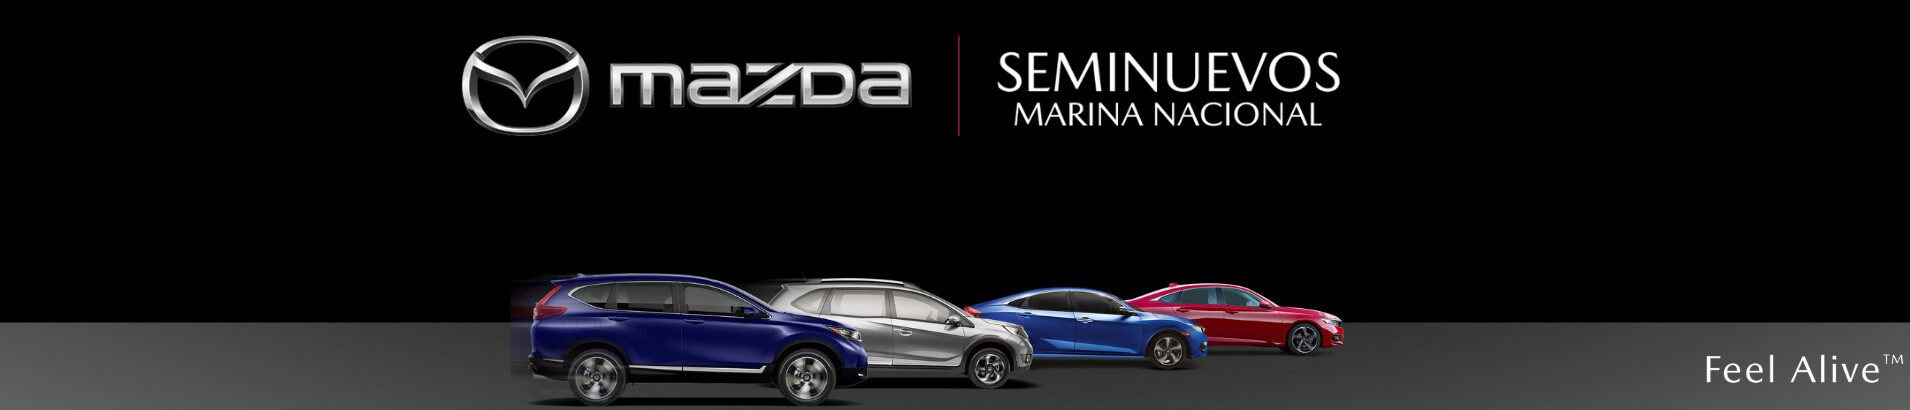  Mazda Marina Nacional